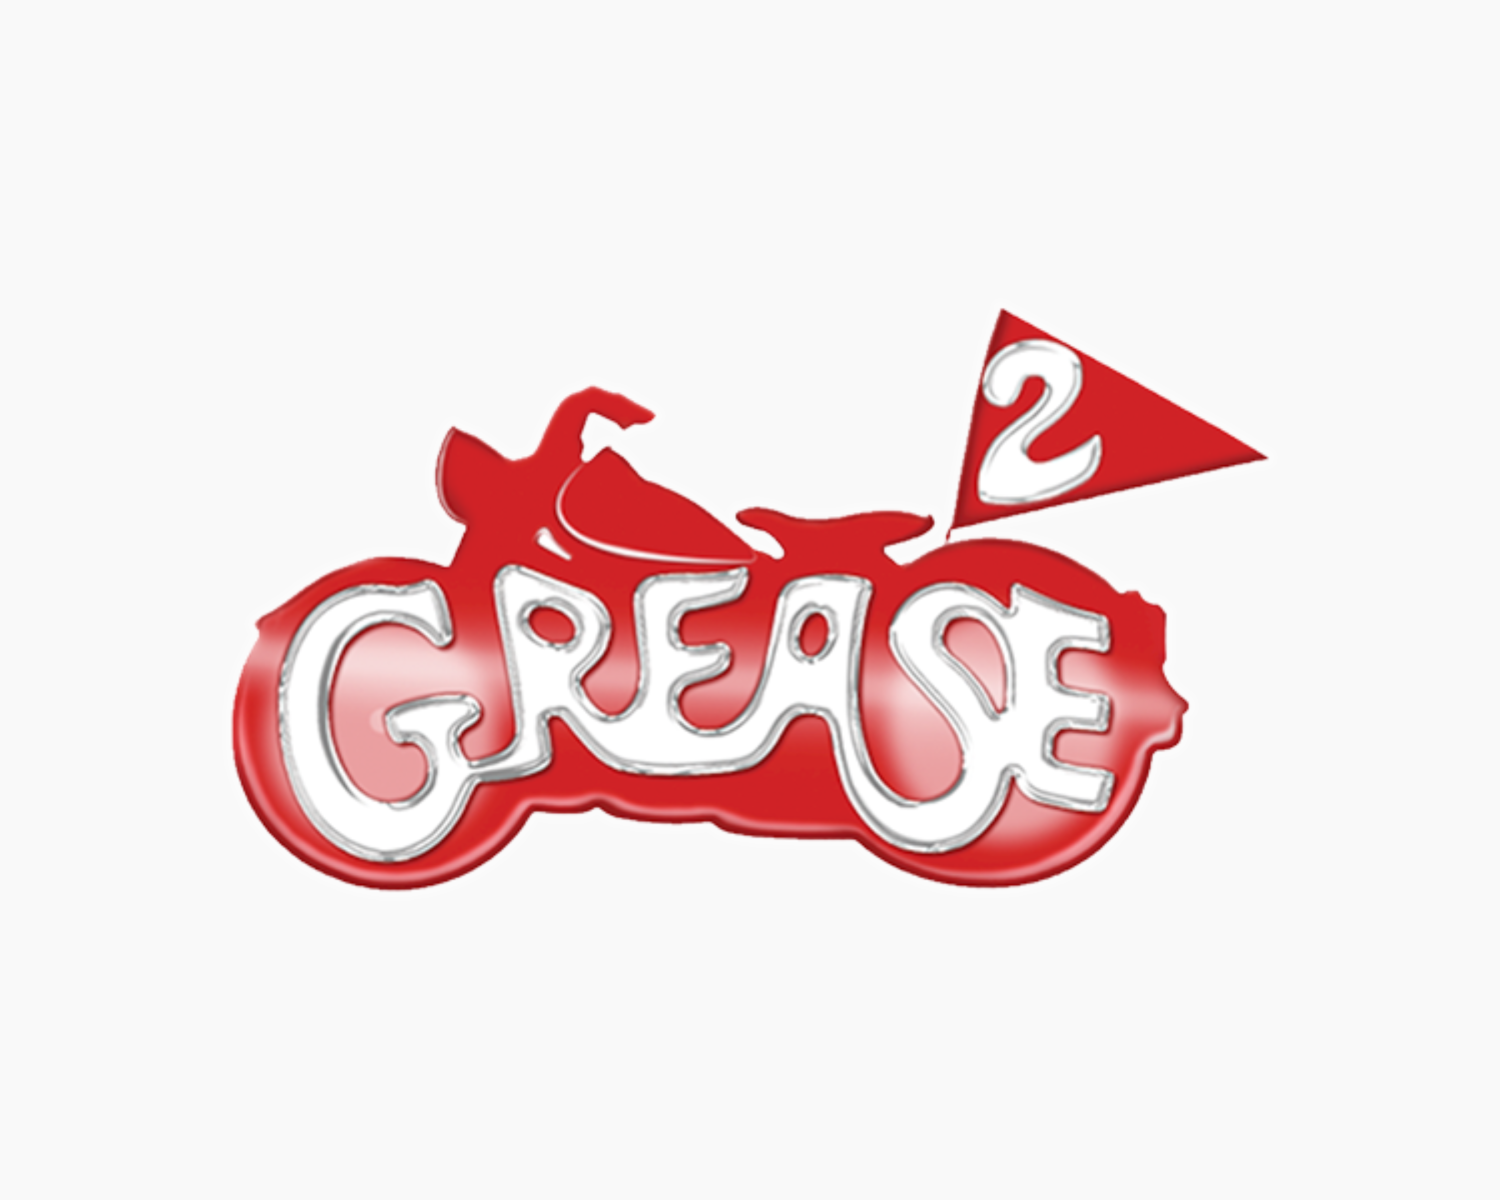 Grease 2 logo